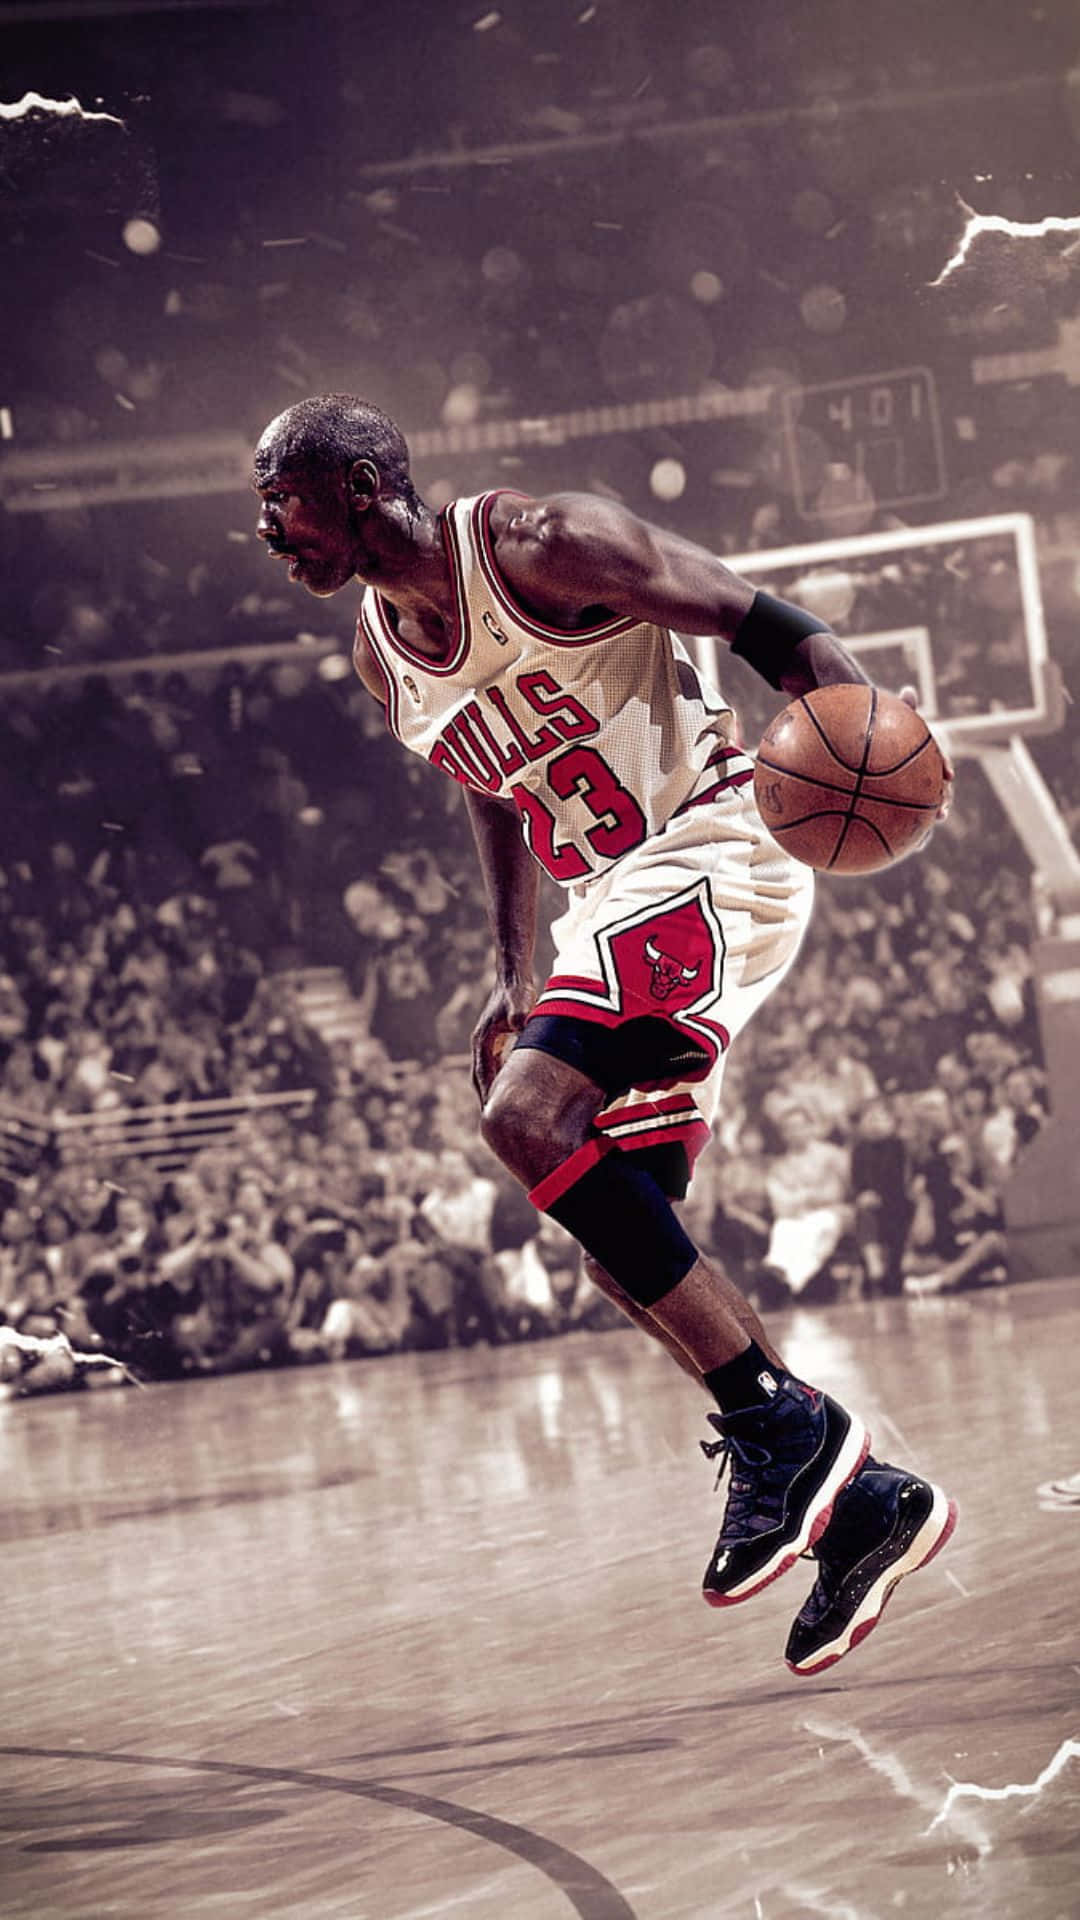 Michael Jordan showing off his new iPhone Wallpaper